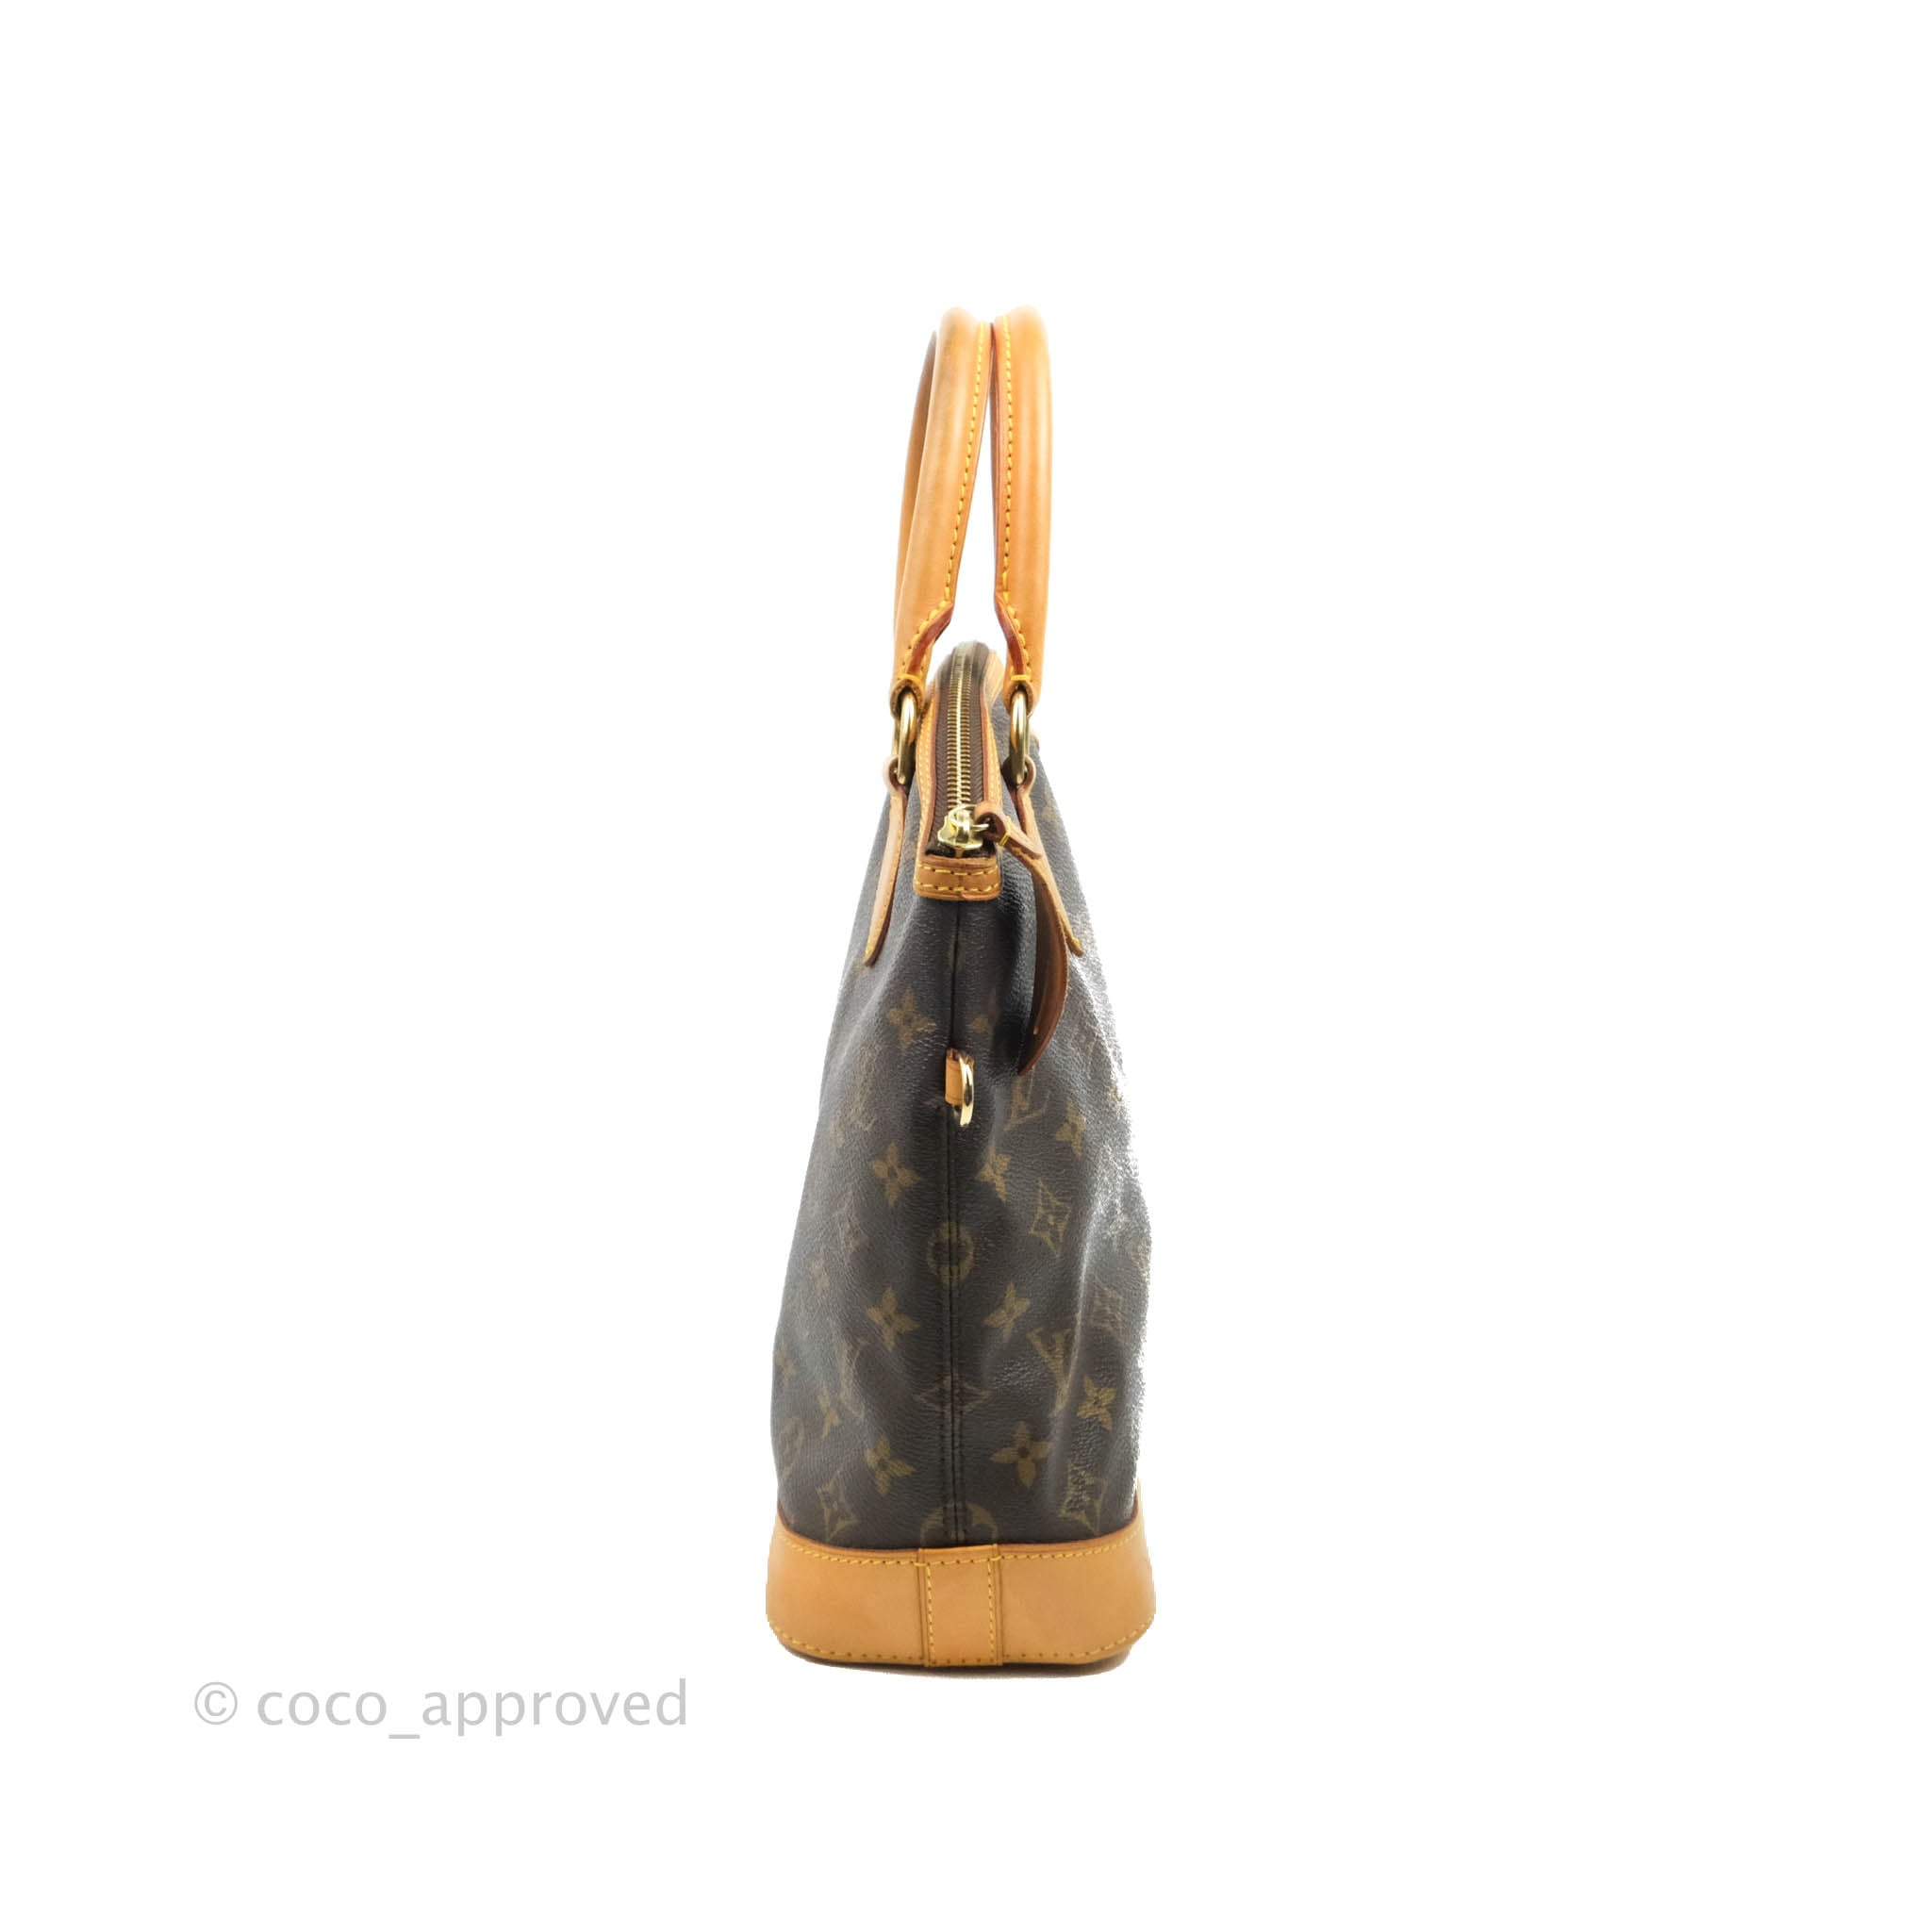 Sold at Auction: A handbag marked Louis Vuitton (Petit Palais